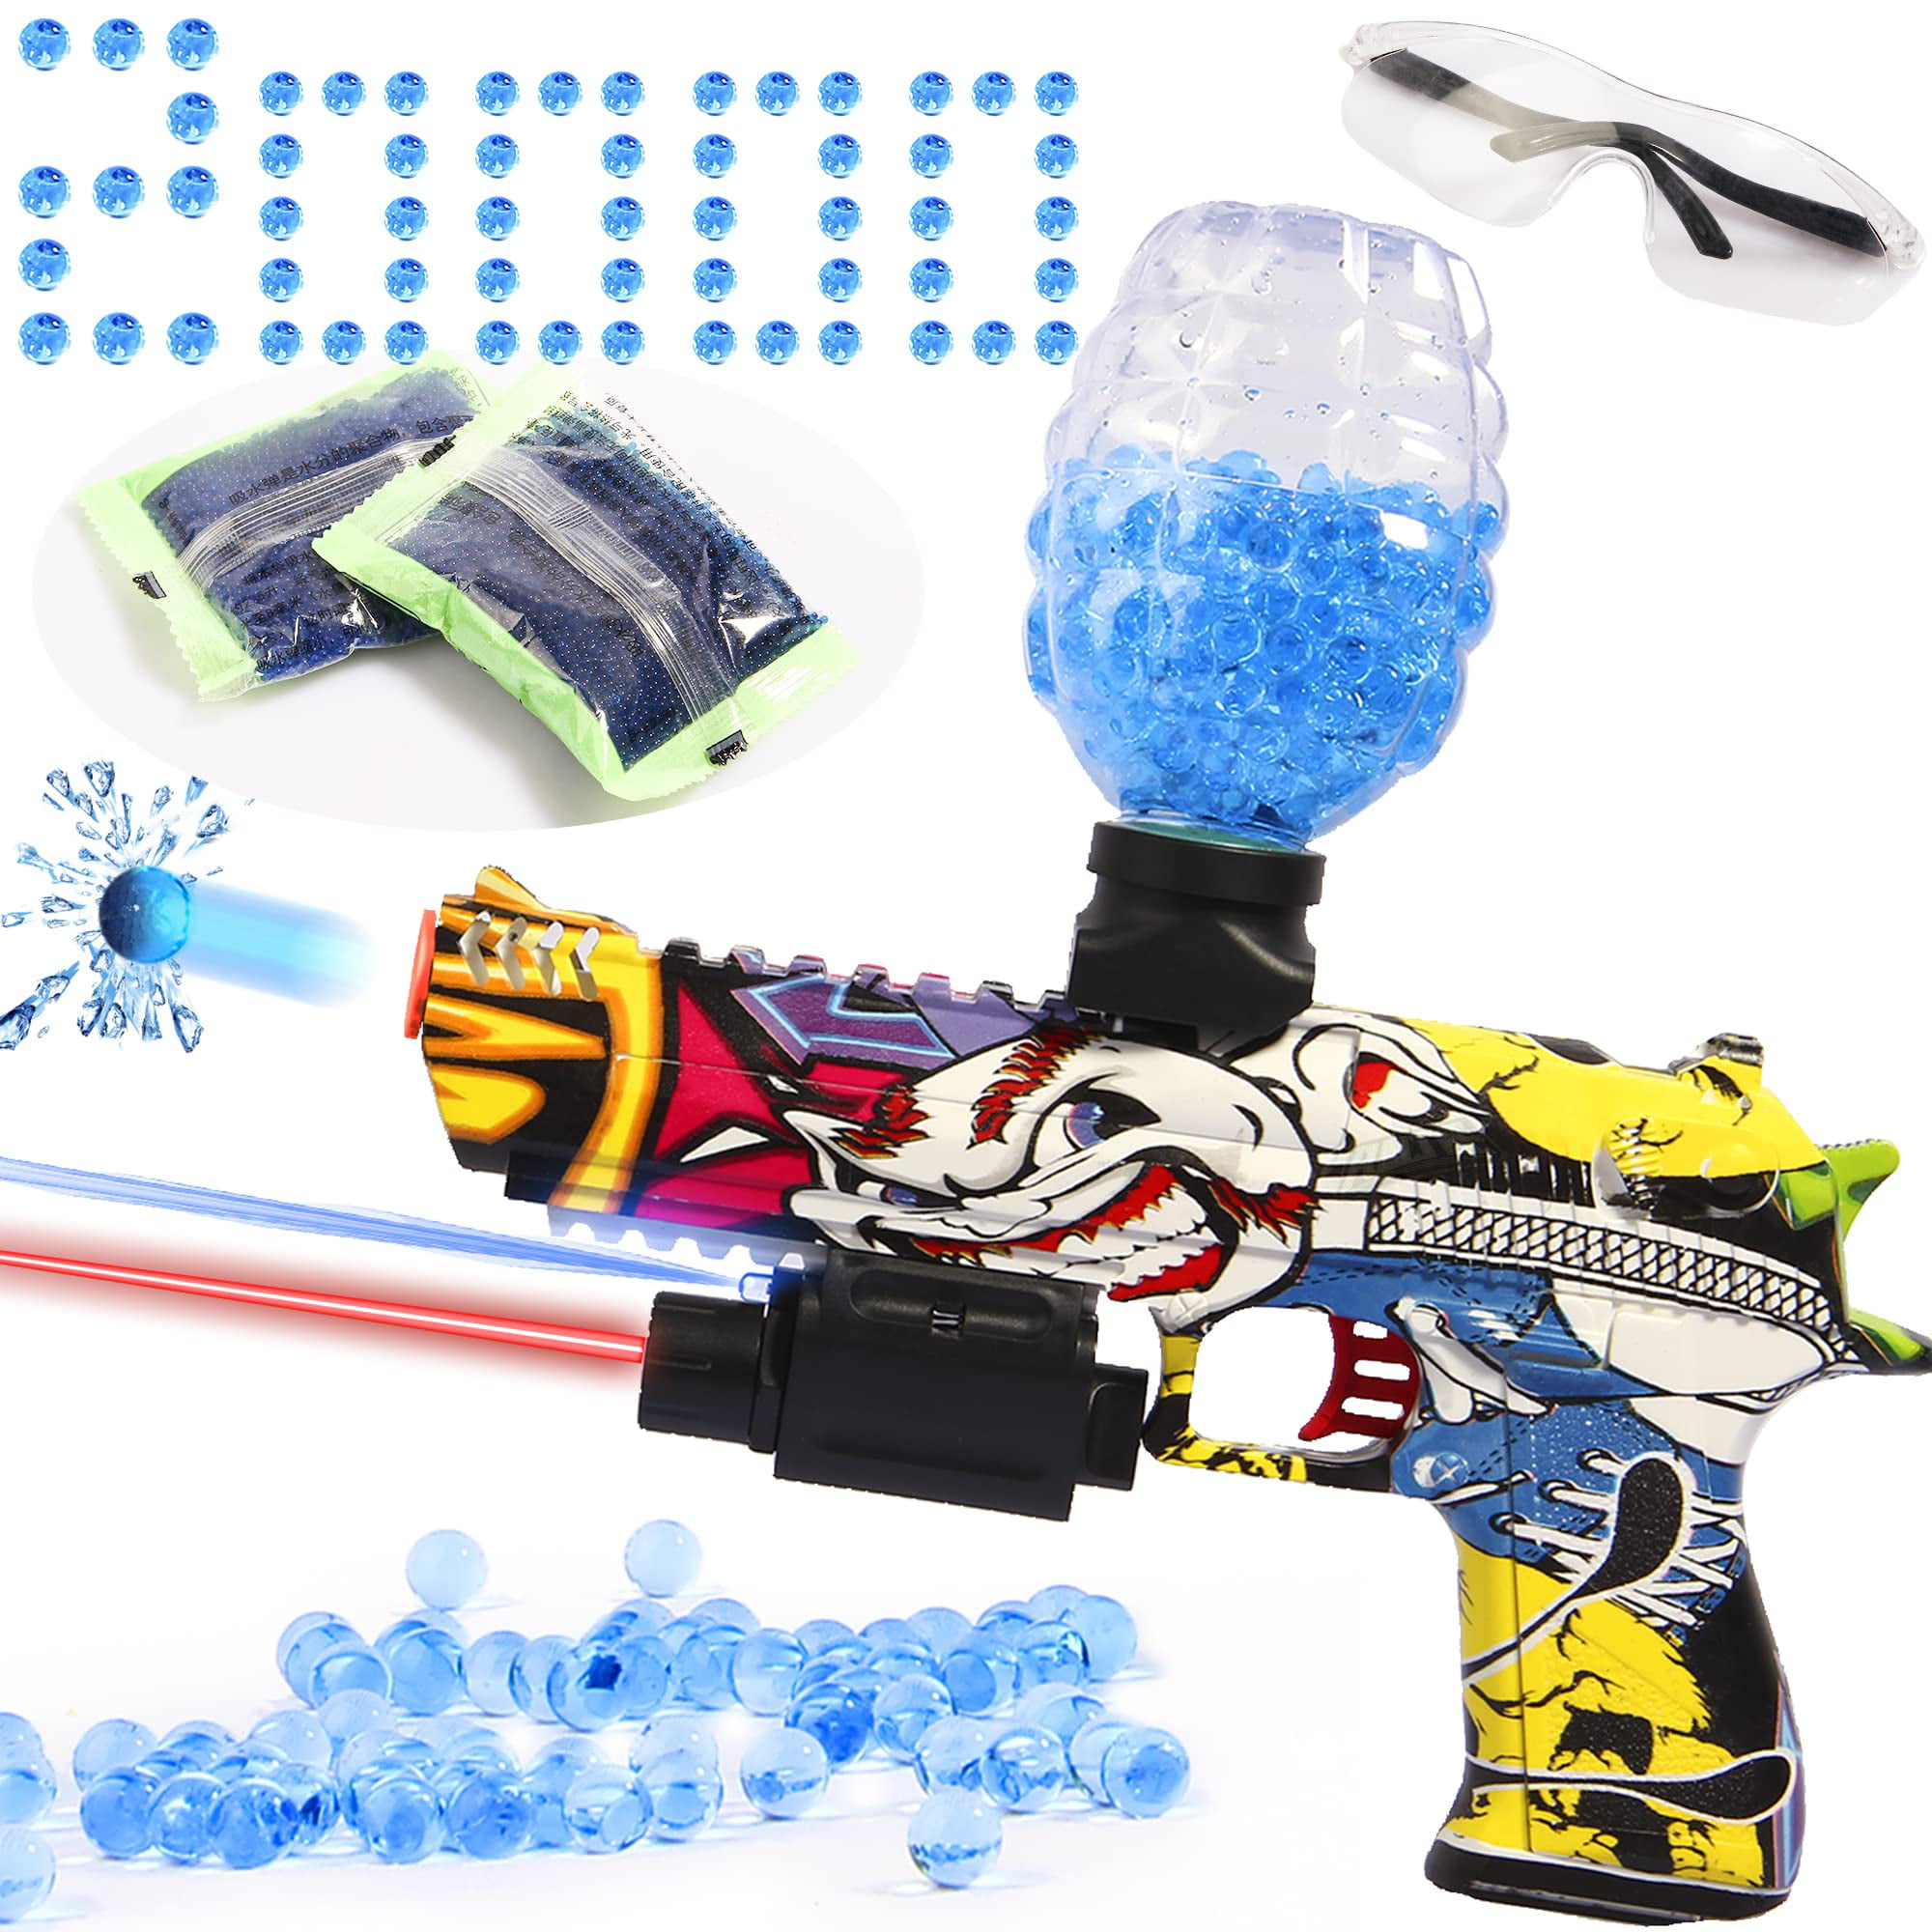 Electric Target for Nerf Toy Gun Accessories for Gel Ball Gun Blaster Toy Gun AU 